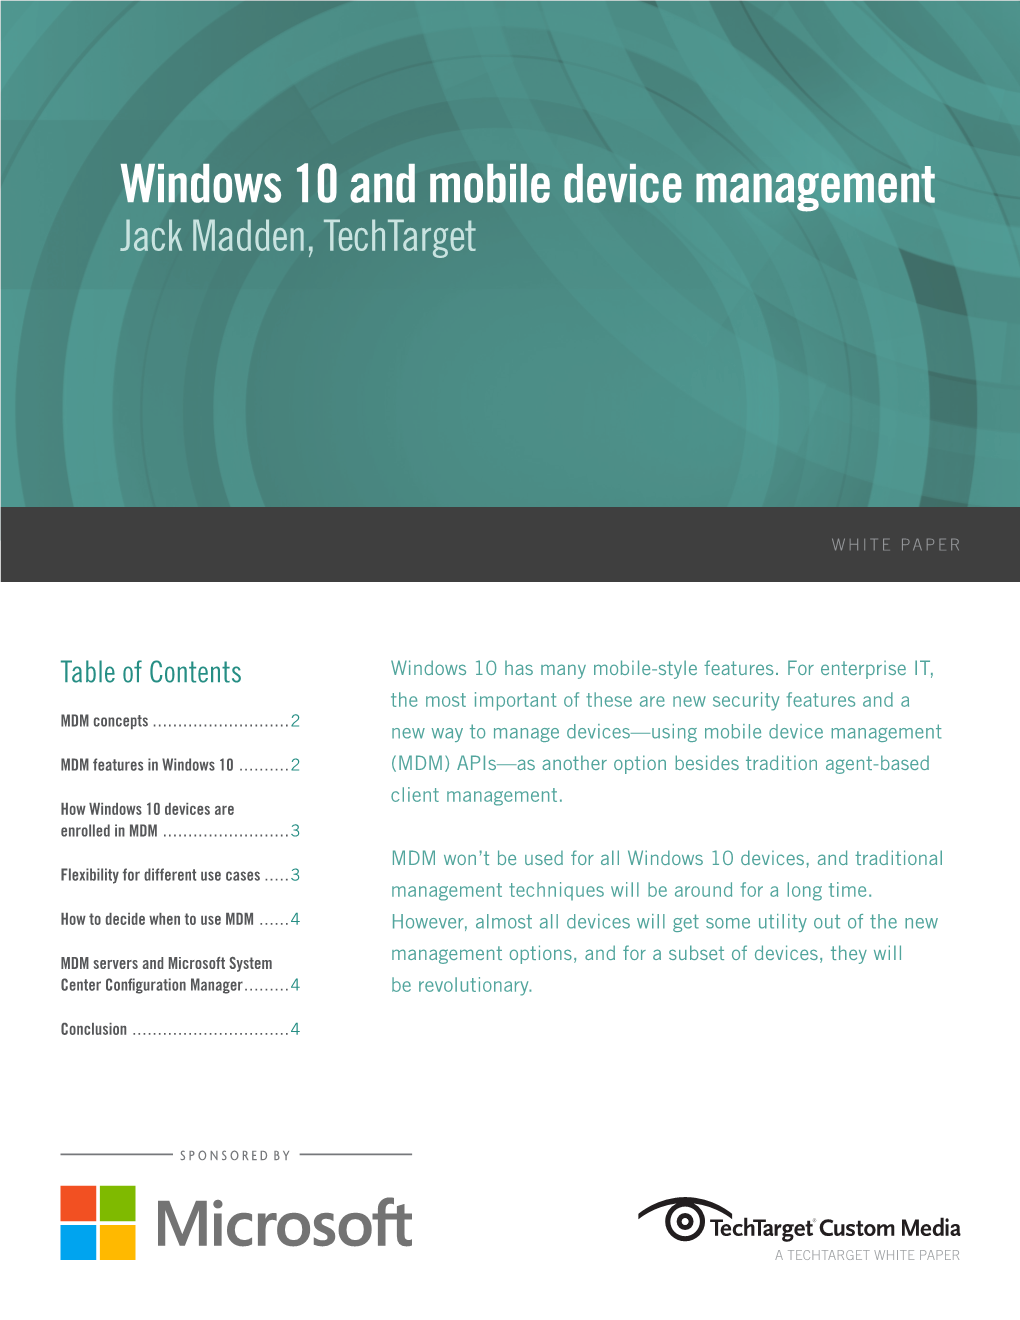 Windows 10 and Mobile Device Management Jack Madden, Techtarget